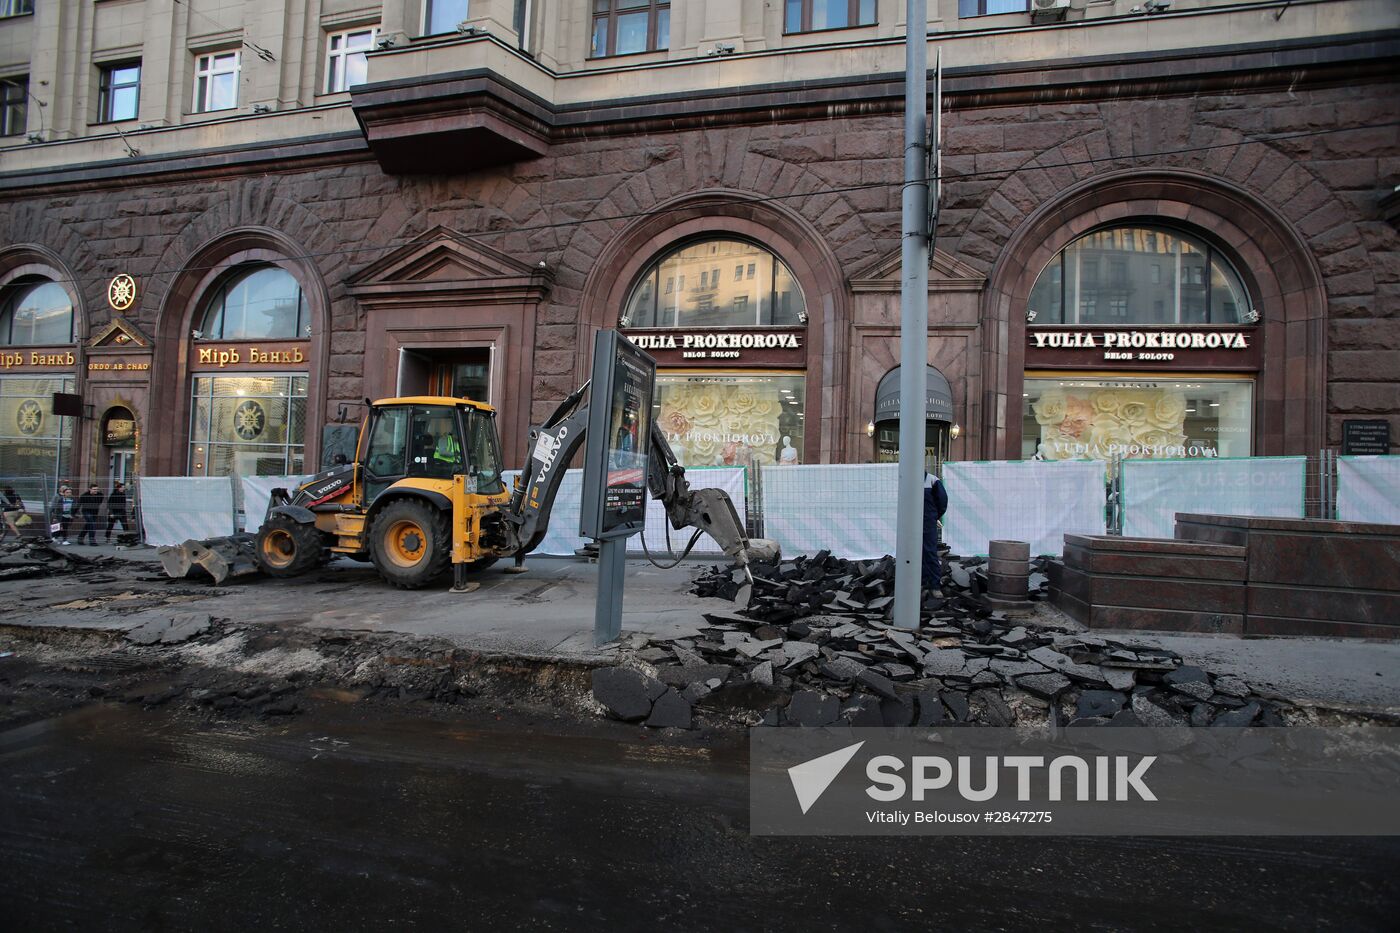 Tverskaya Street in Moscow undergoes reconstruction